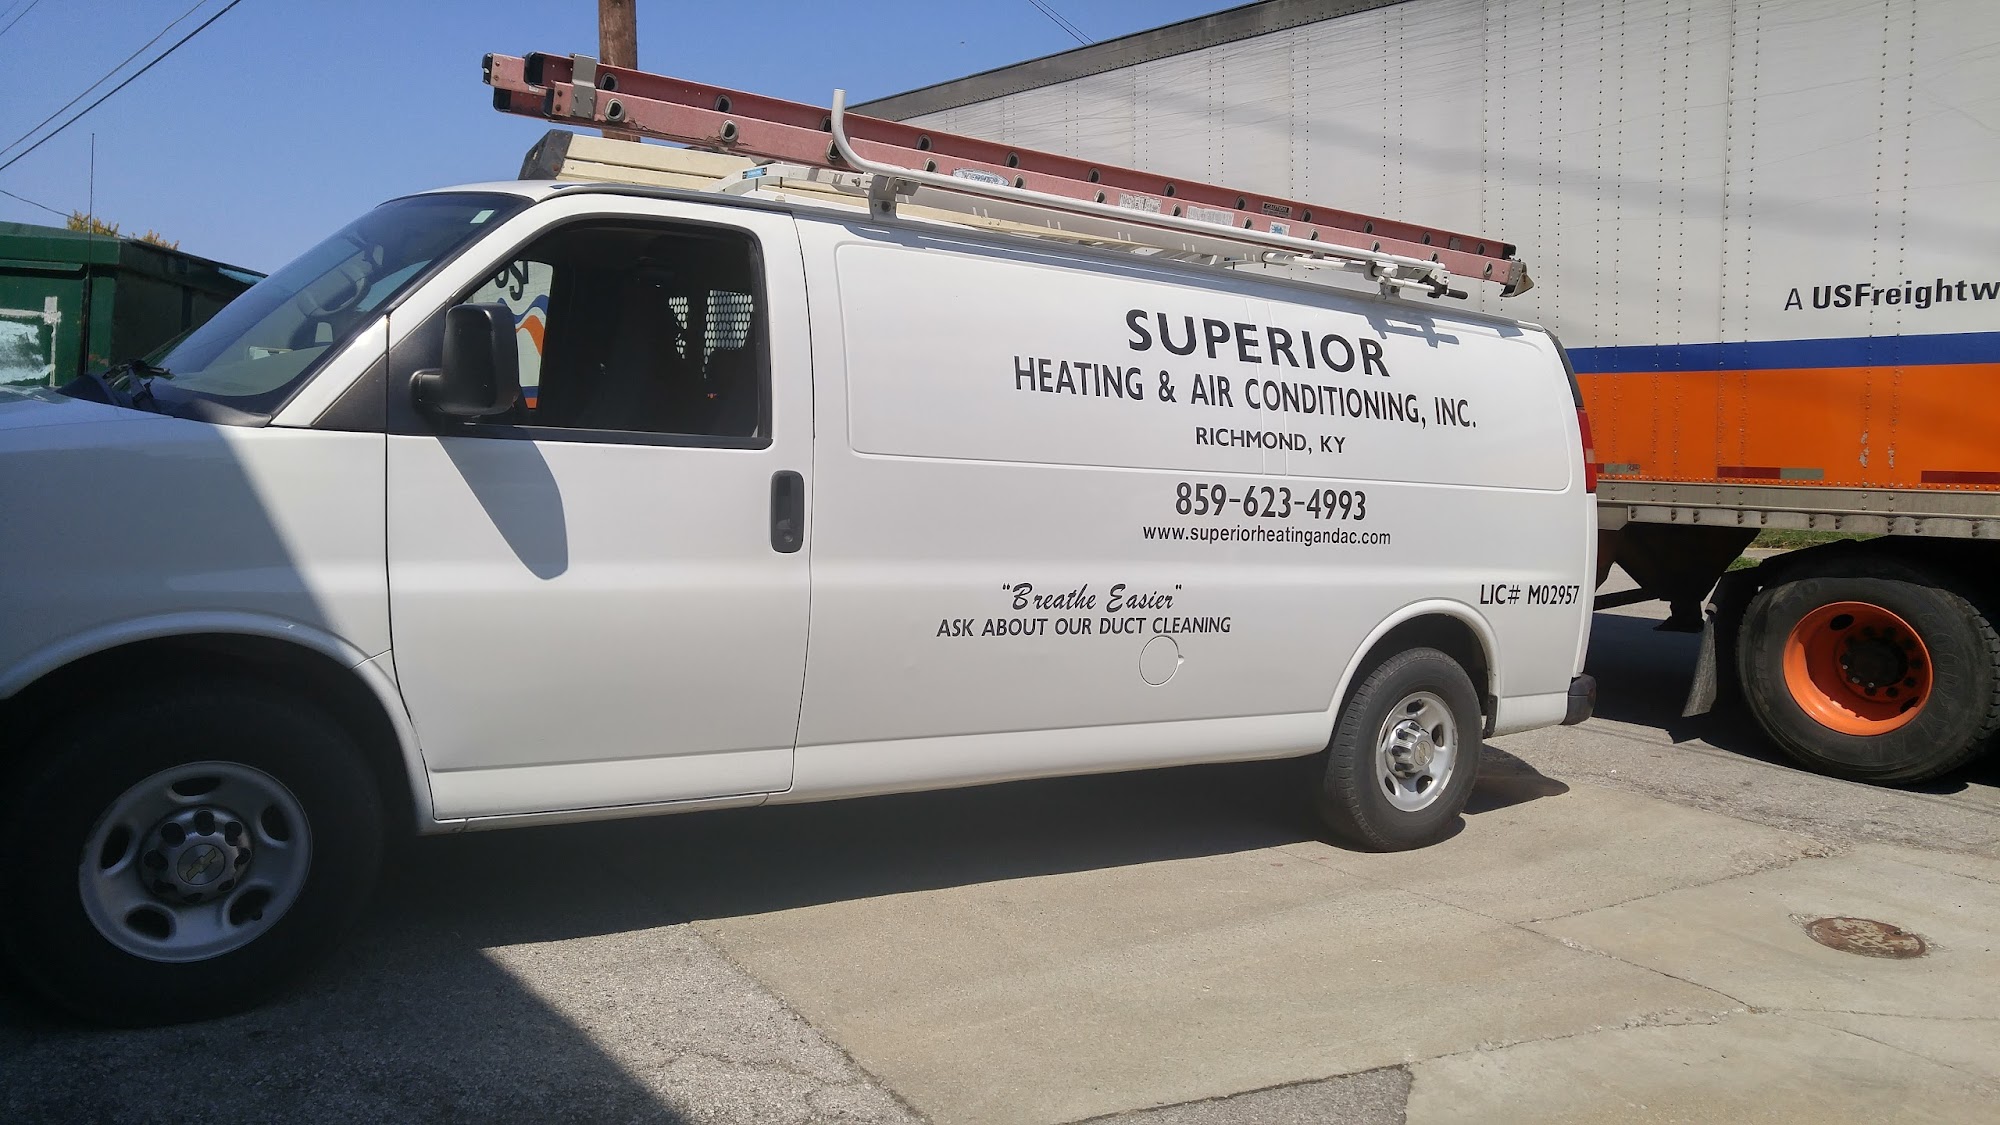 Superior Heating & Air Conditioning, Inc.